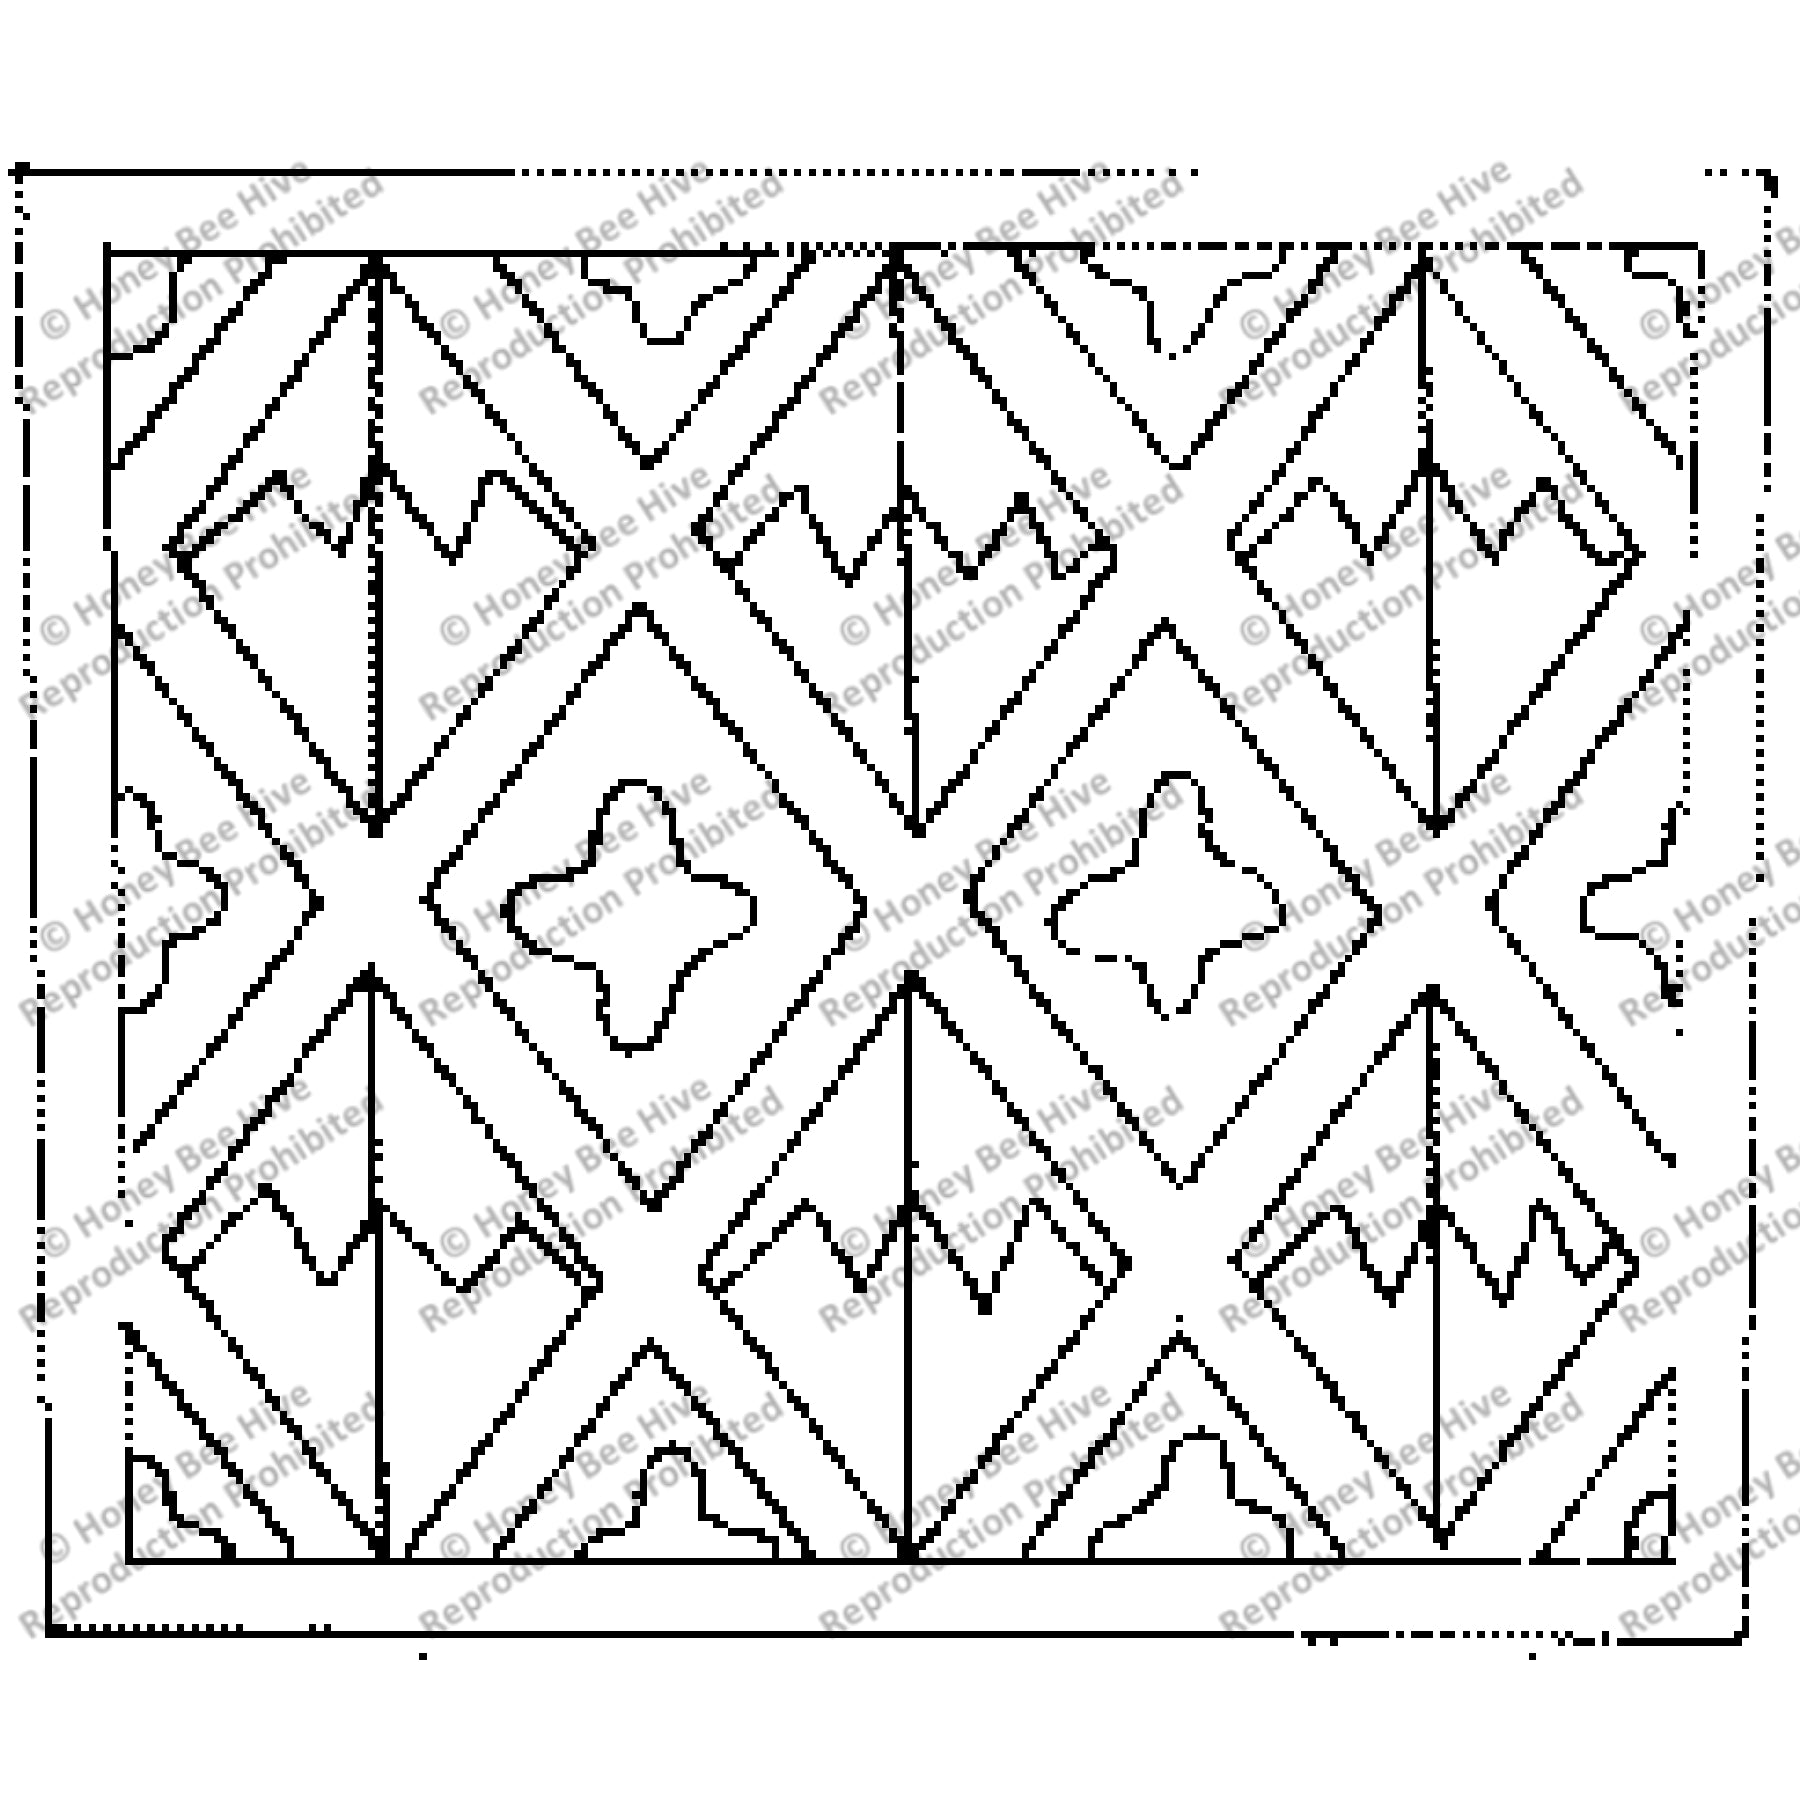 Criss Cross, rug hooking pattern